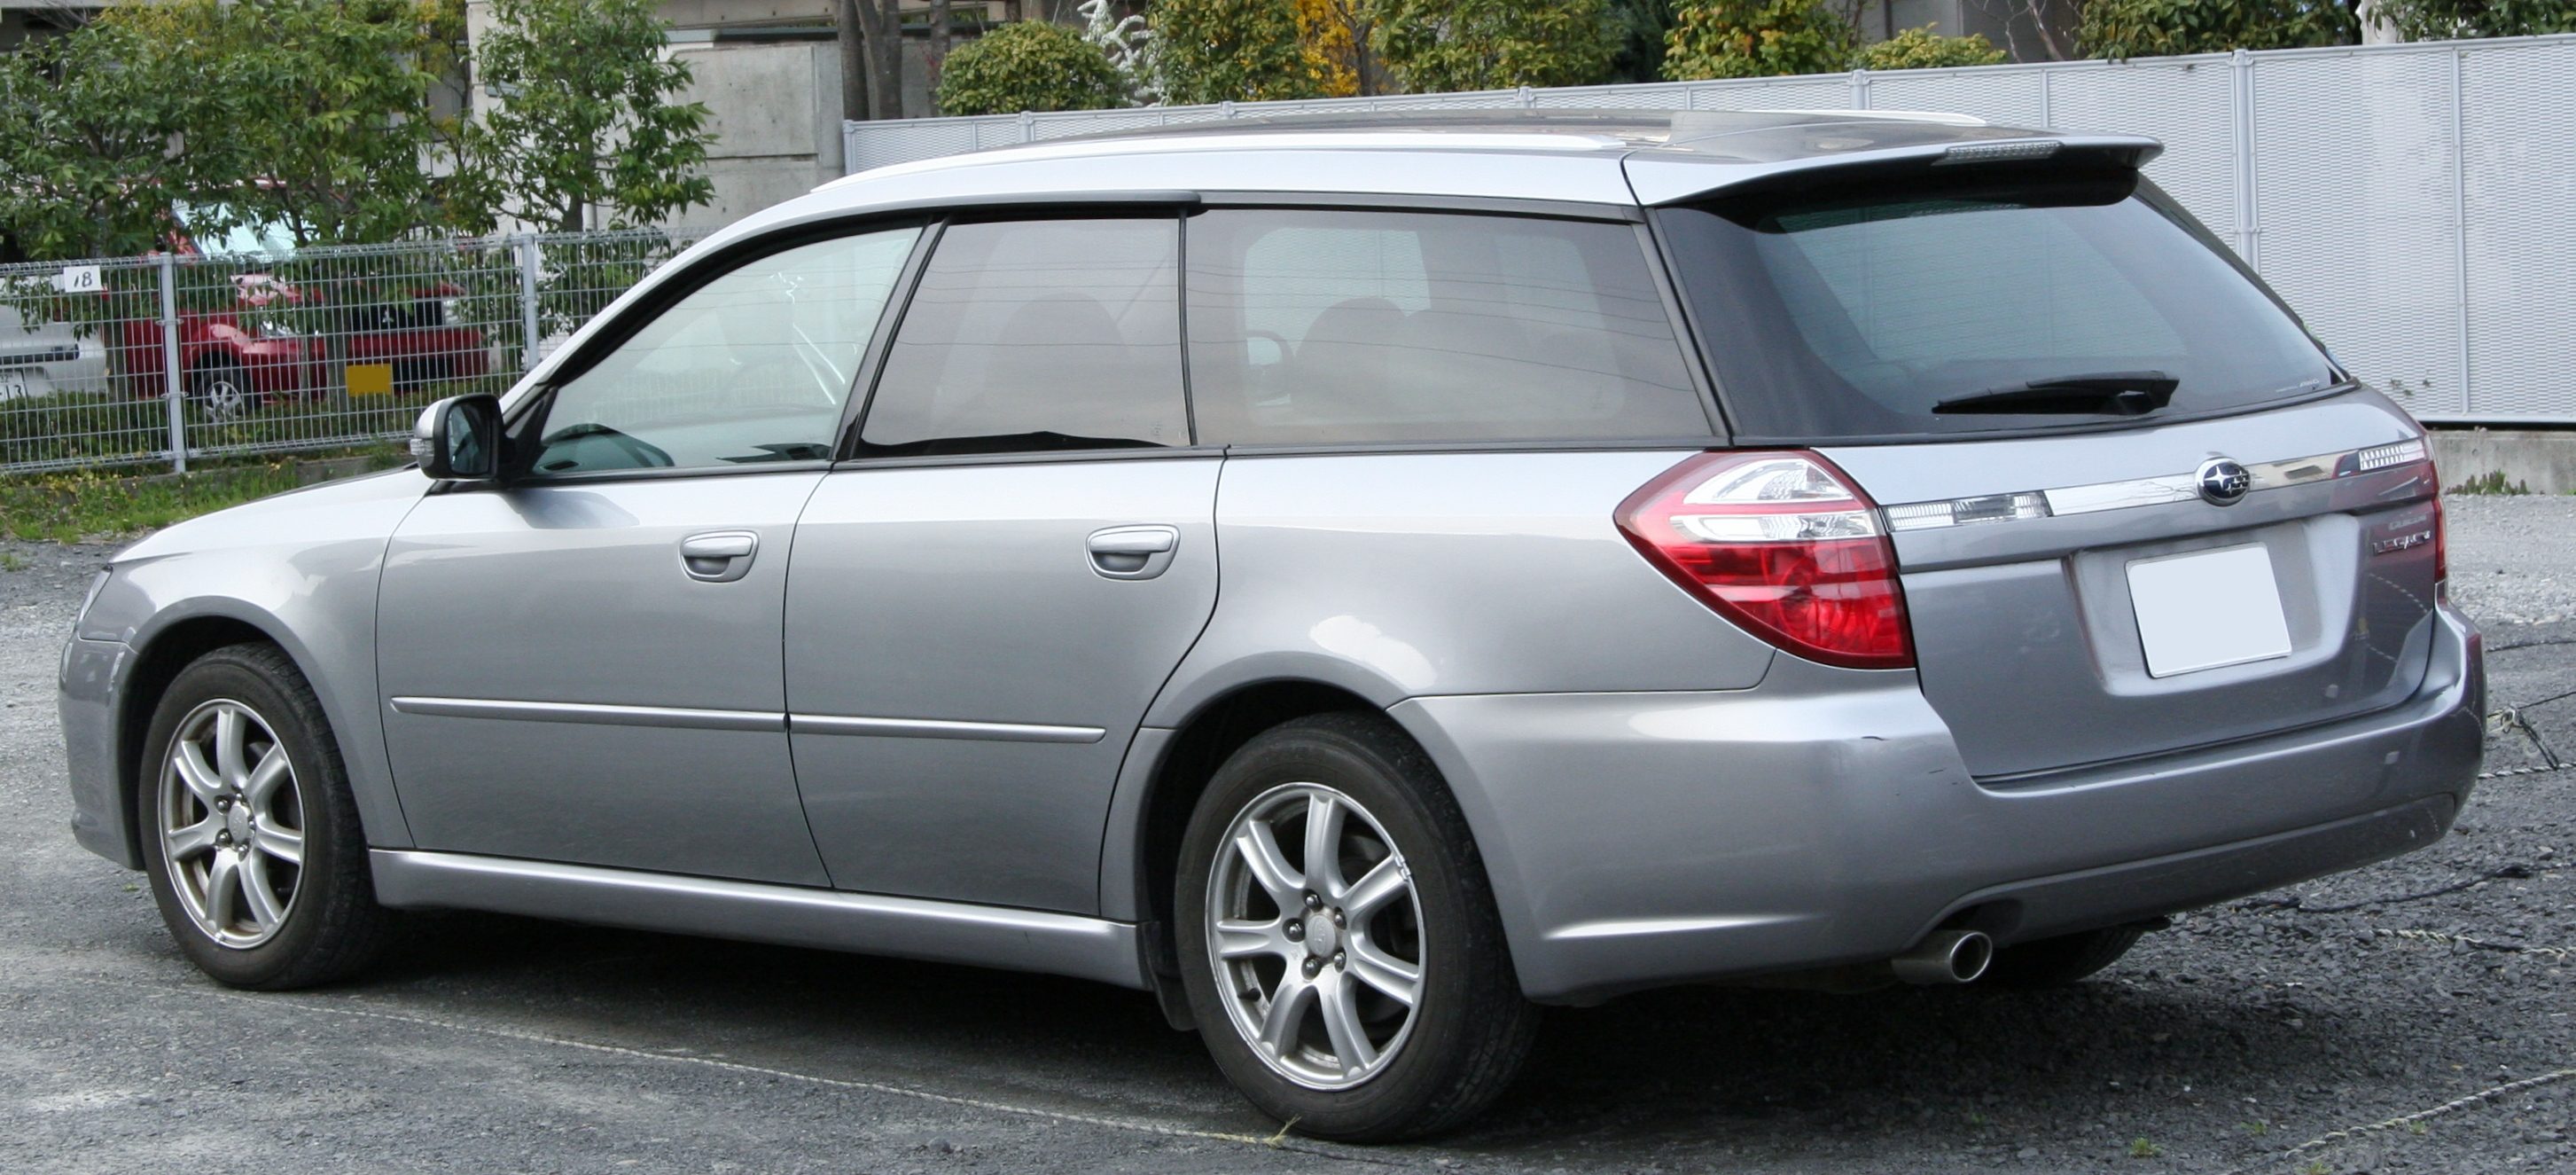 Subaru_Legacy_Touring_Wagon_BP_rear.jpg